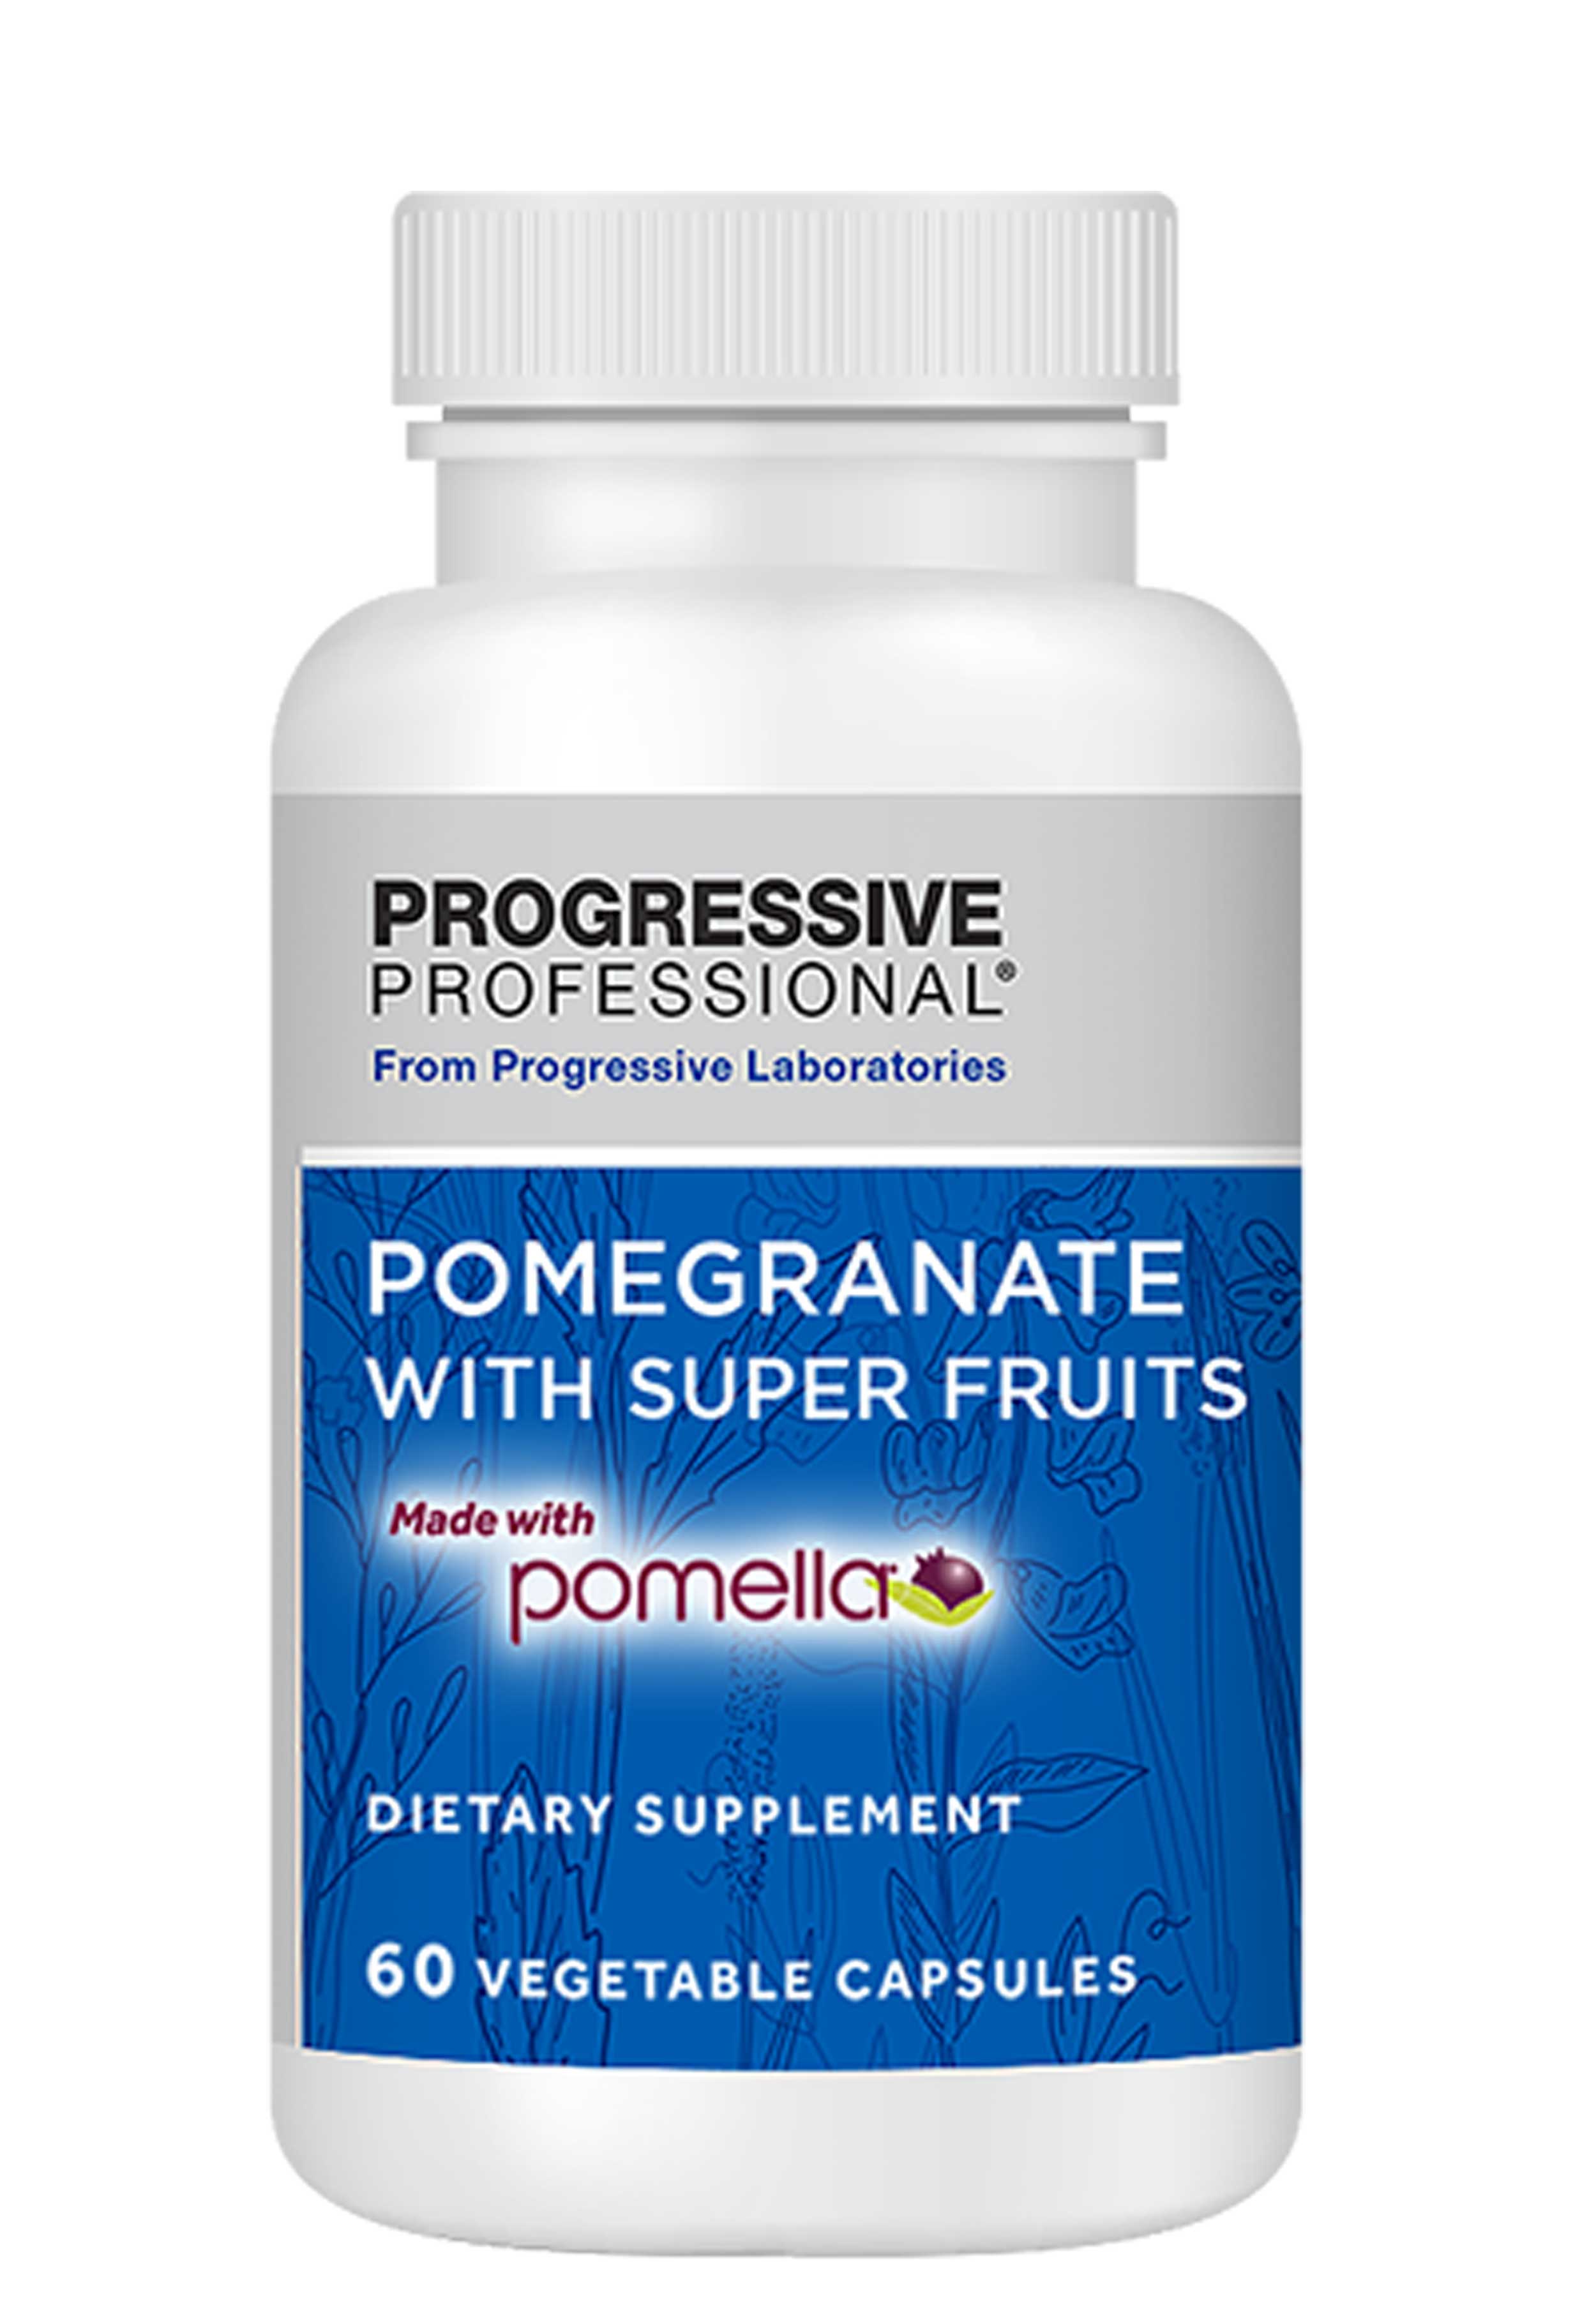 Progressive Laboratories Pomegranate with Super Fruits